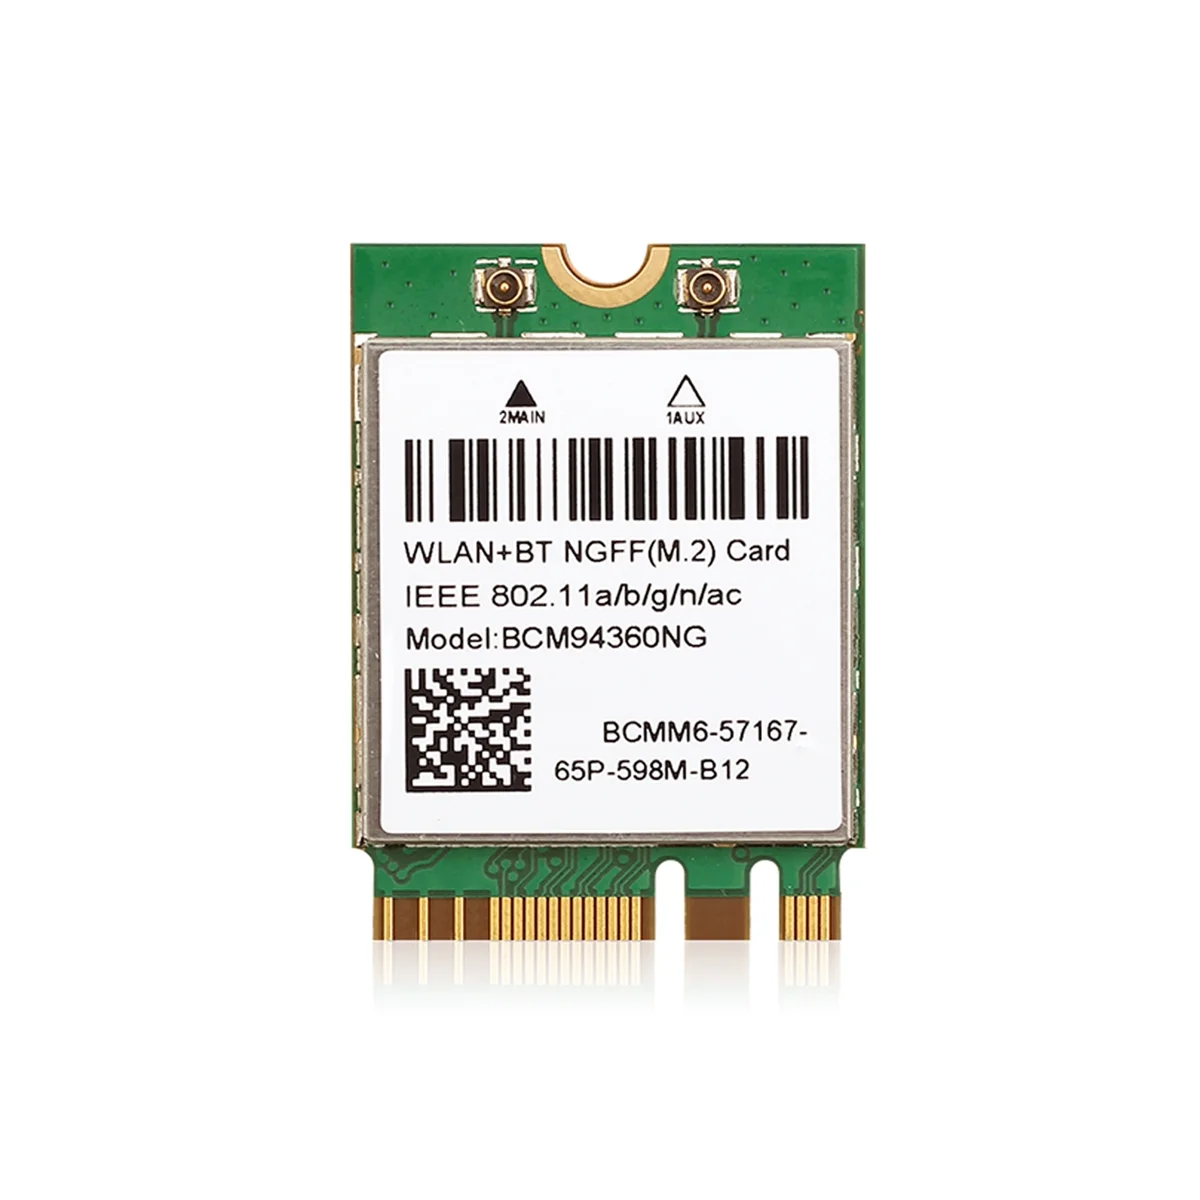 

BCM94360NG Wireless Adapter M.2 Desktop Kit Dual Band 2.4G/5G 802.11AC Bluetooth 4.0 NGFF Wifi Card with Antenna Set